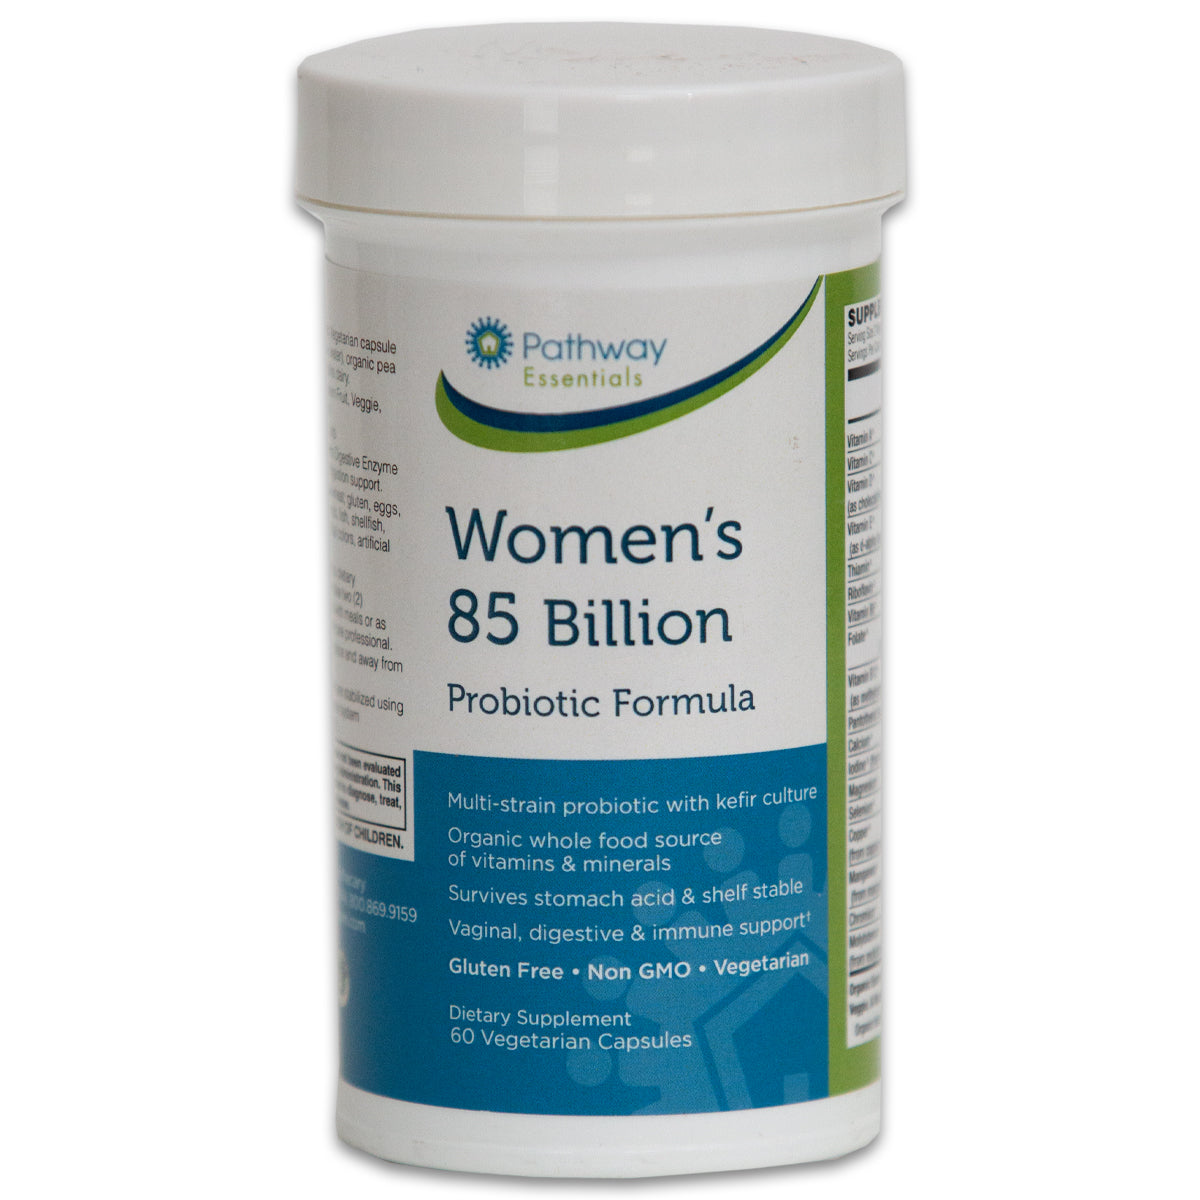 Women’s 85 Billion Probiotic